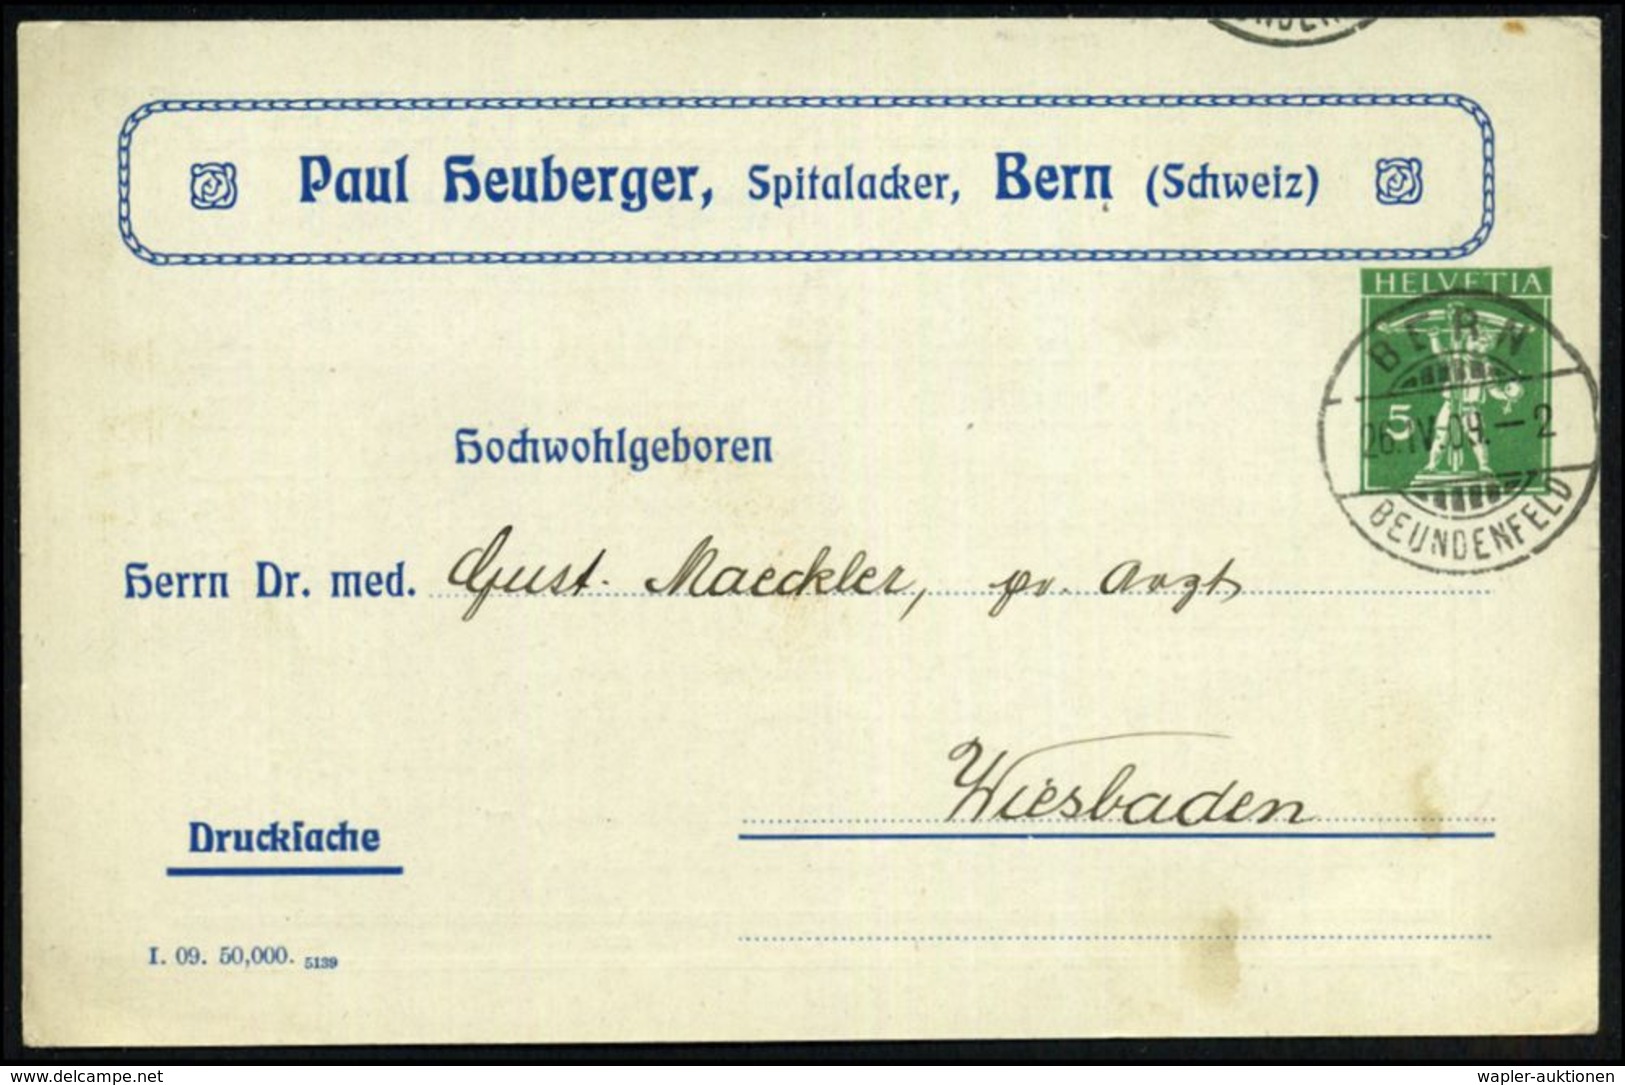 PHARMAZIE / MEDIKAMENTE : SCHWEIZ 1909 (26.4.) Reklame-PP 5 C. Tellknabe, Grün: Paul Heuberger.. Alpenmilch-Kephirpastil - Pharmacie